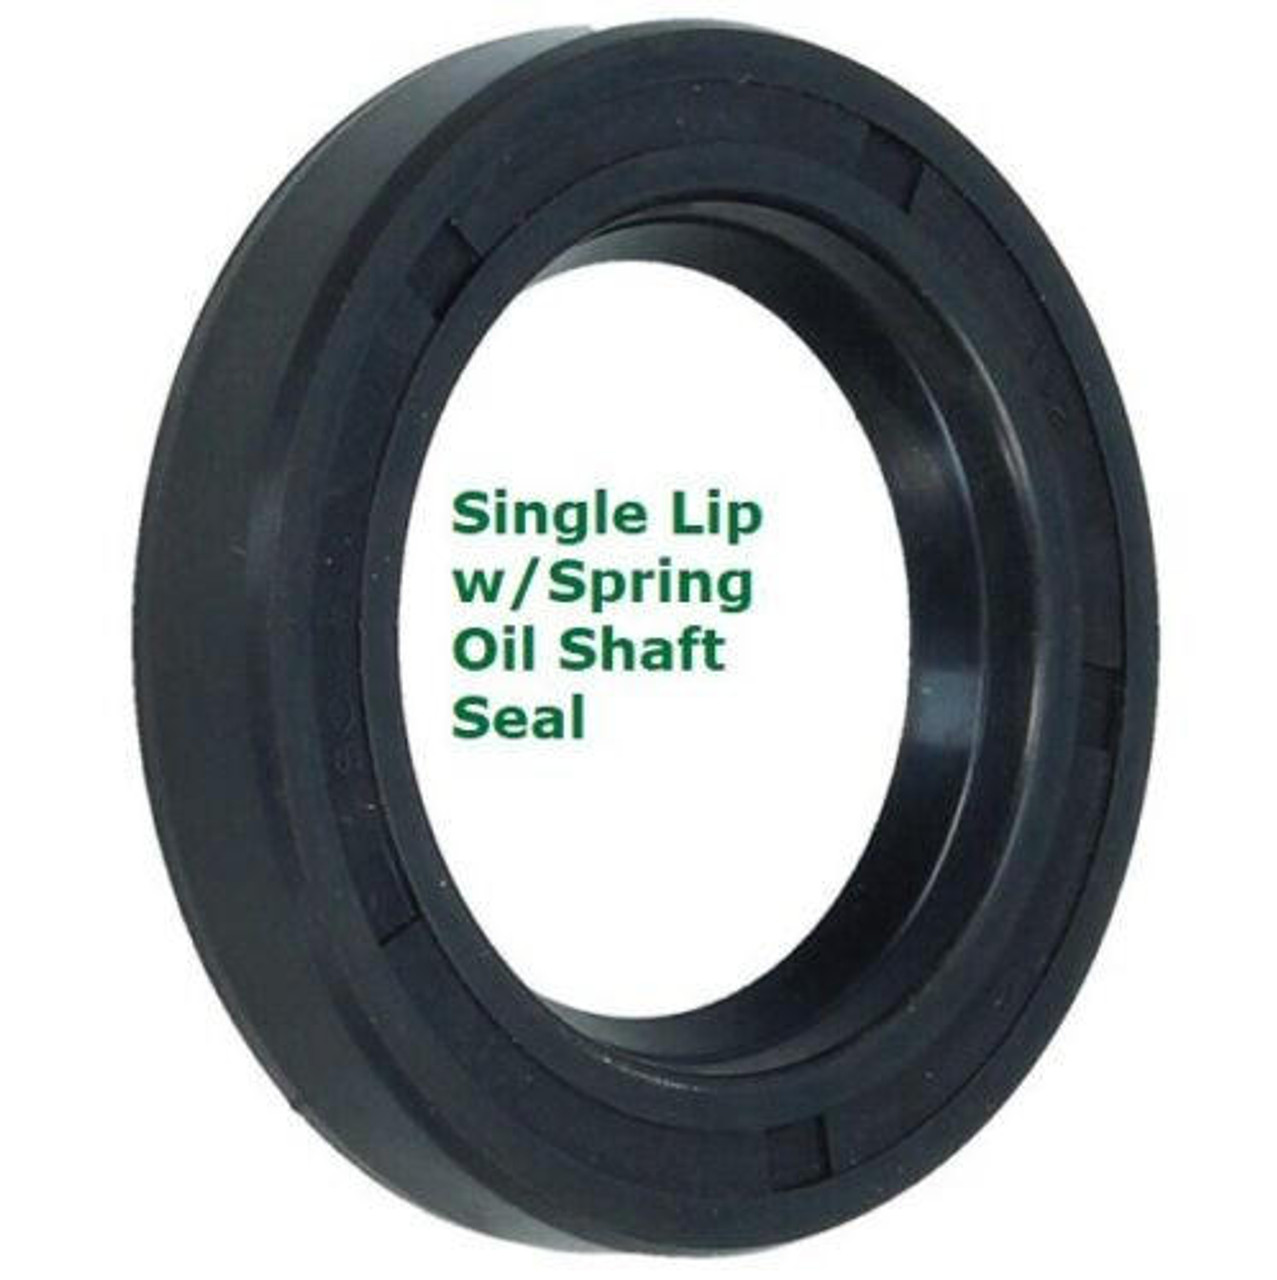 Metric Oil Shaft Seal 55 x 100 x 10mm Single Lip   Price for 1 pc